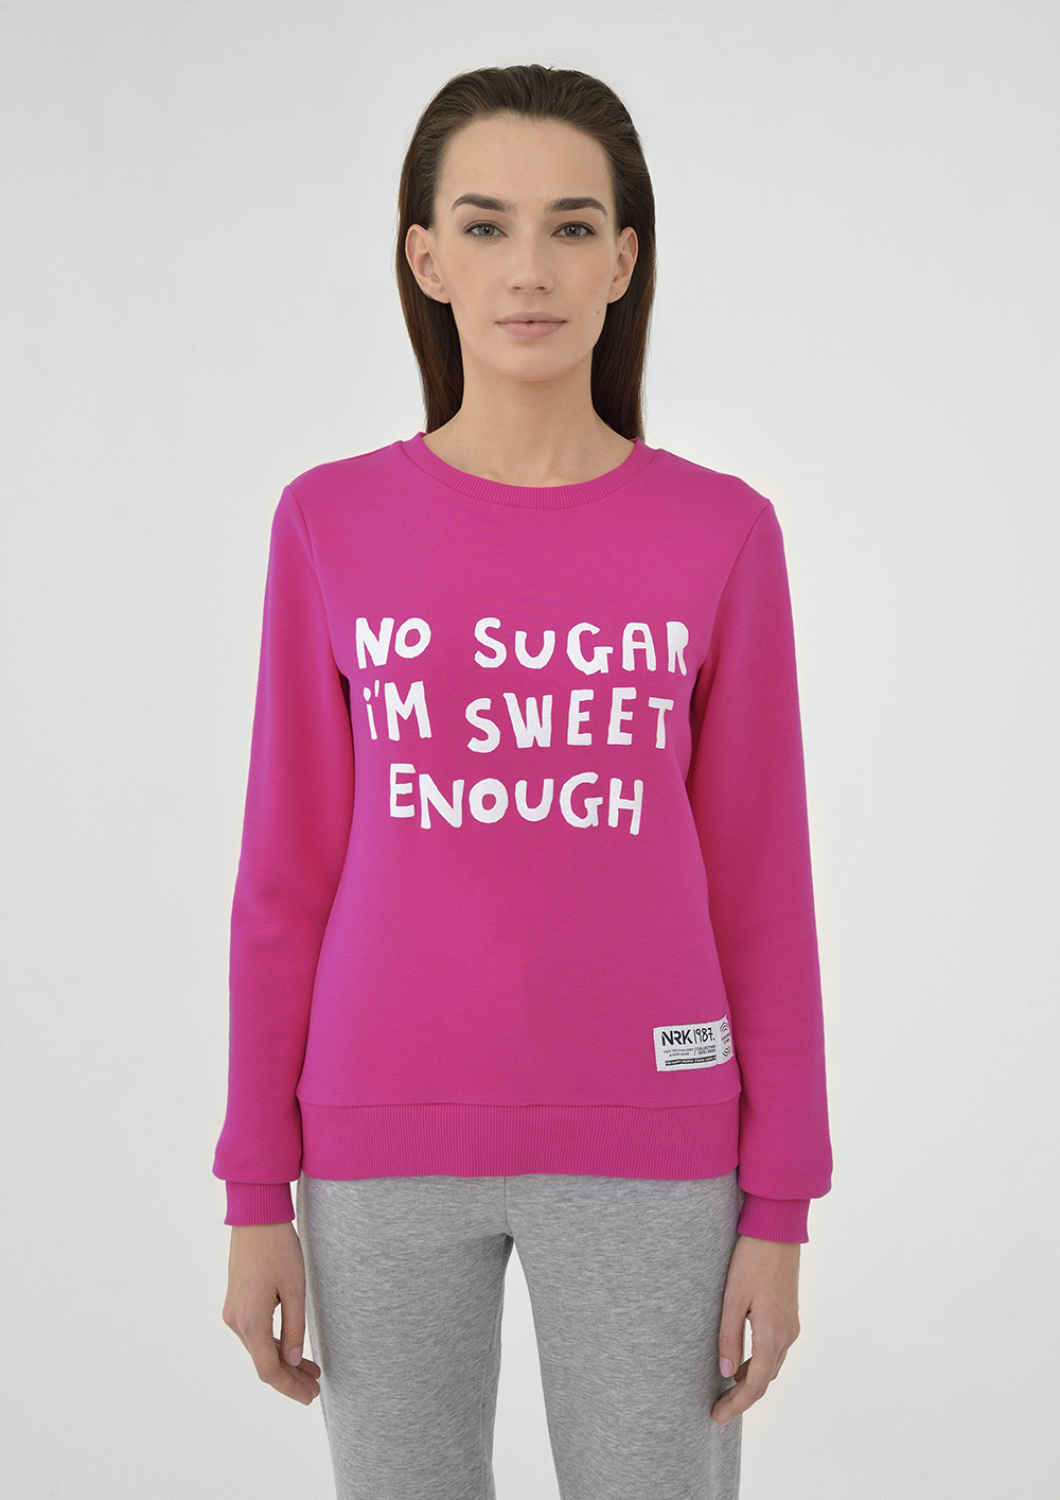 No Sugar sweatshirt. Female.